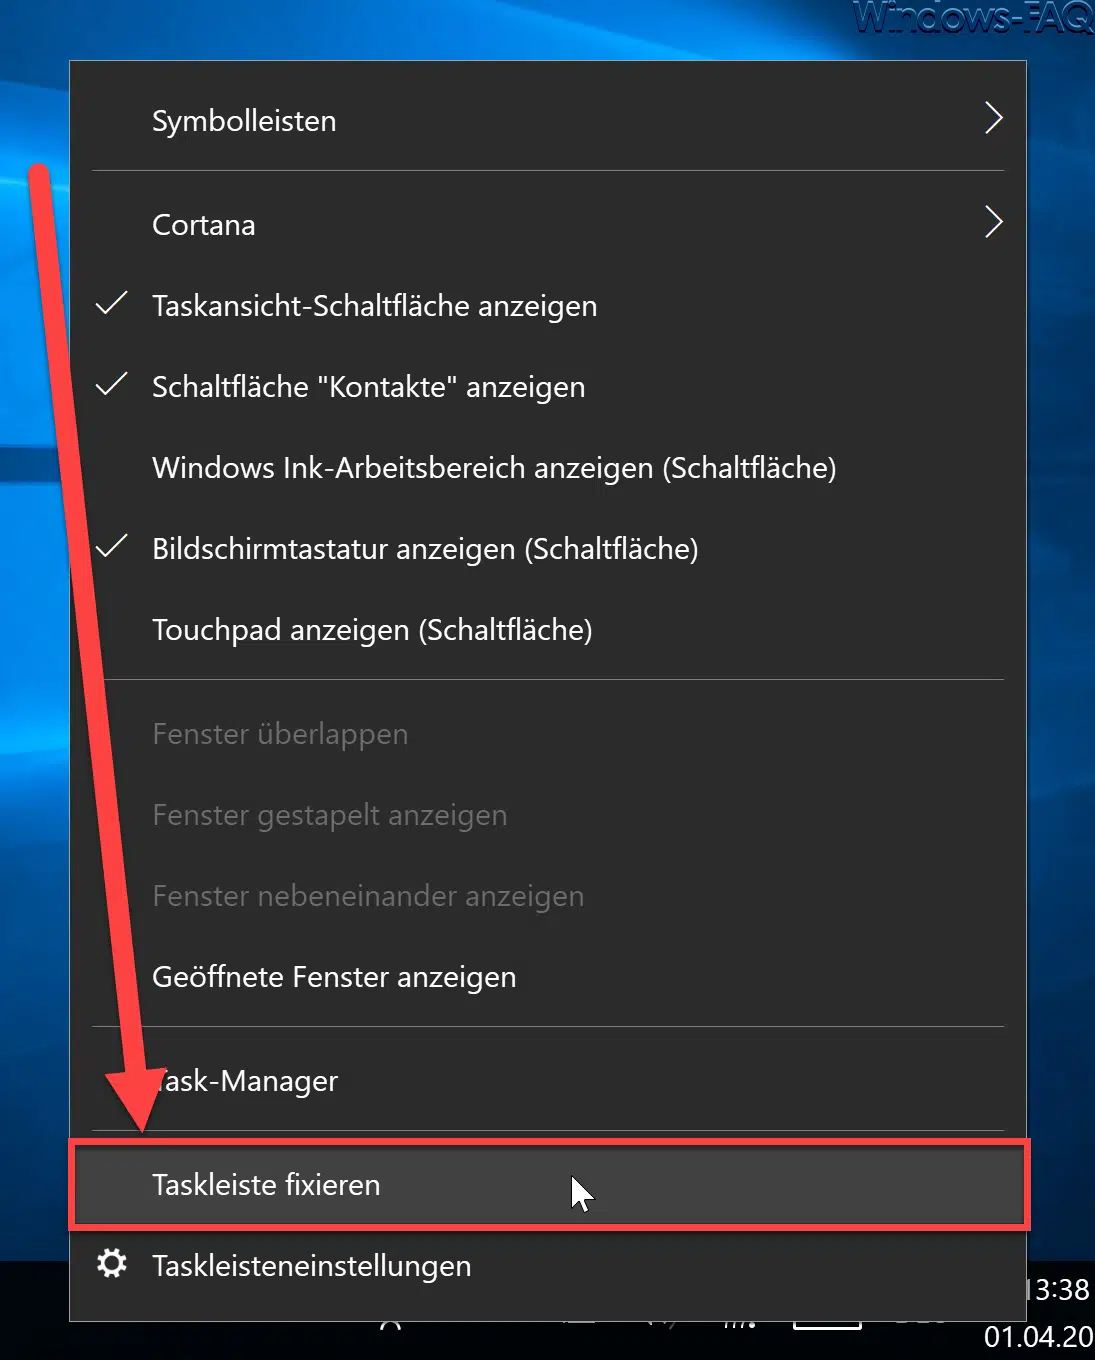 Taskleiste fixieren bei Windows 10